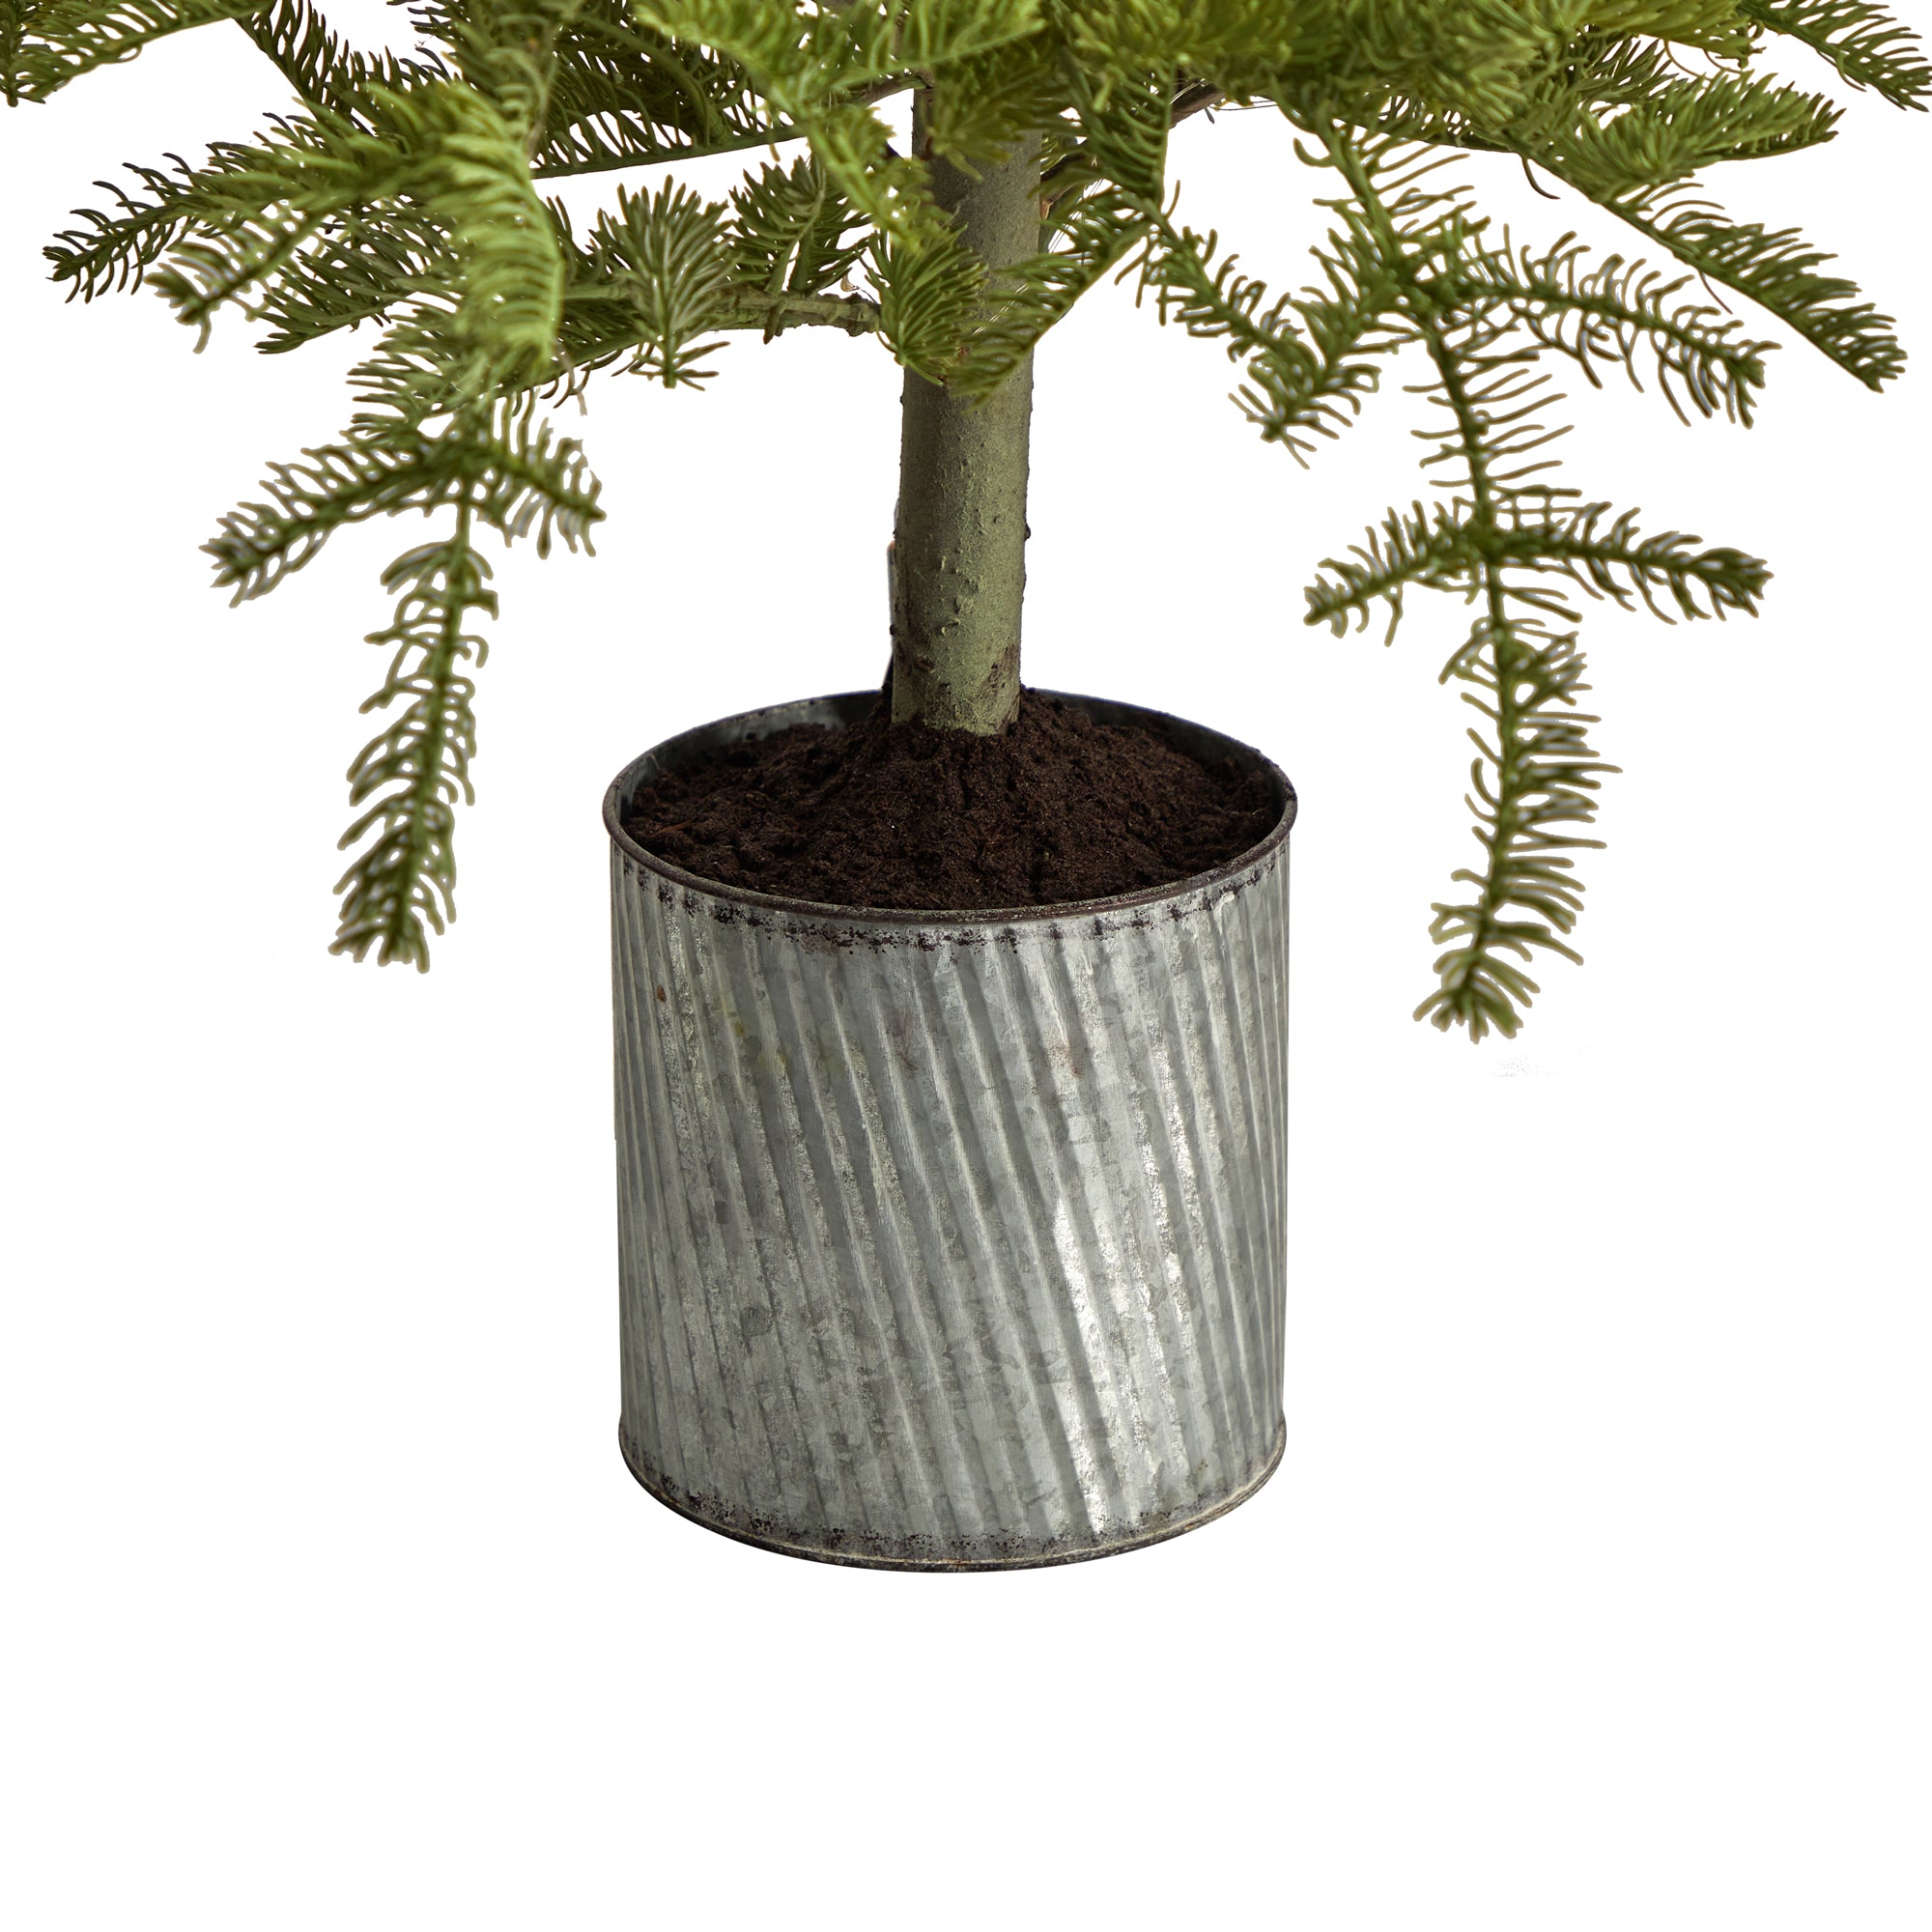 4.5' Pre-Lit Christmas Pine Artificial Tree in Decorative Planter